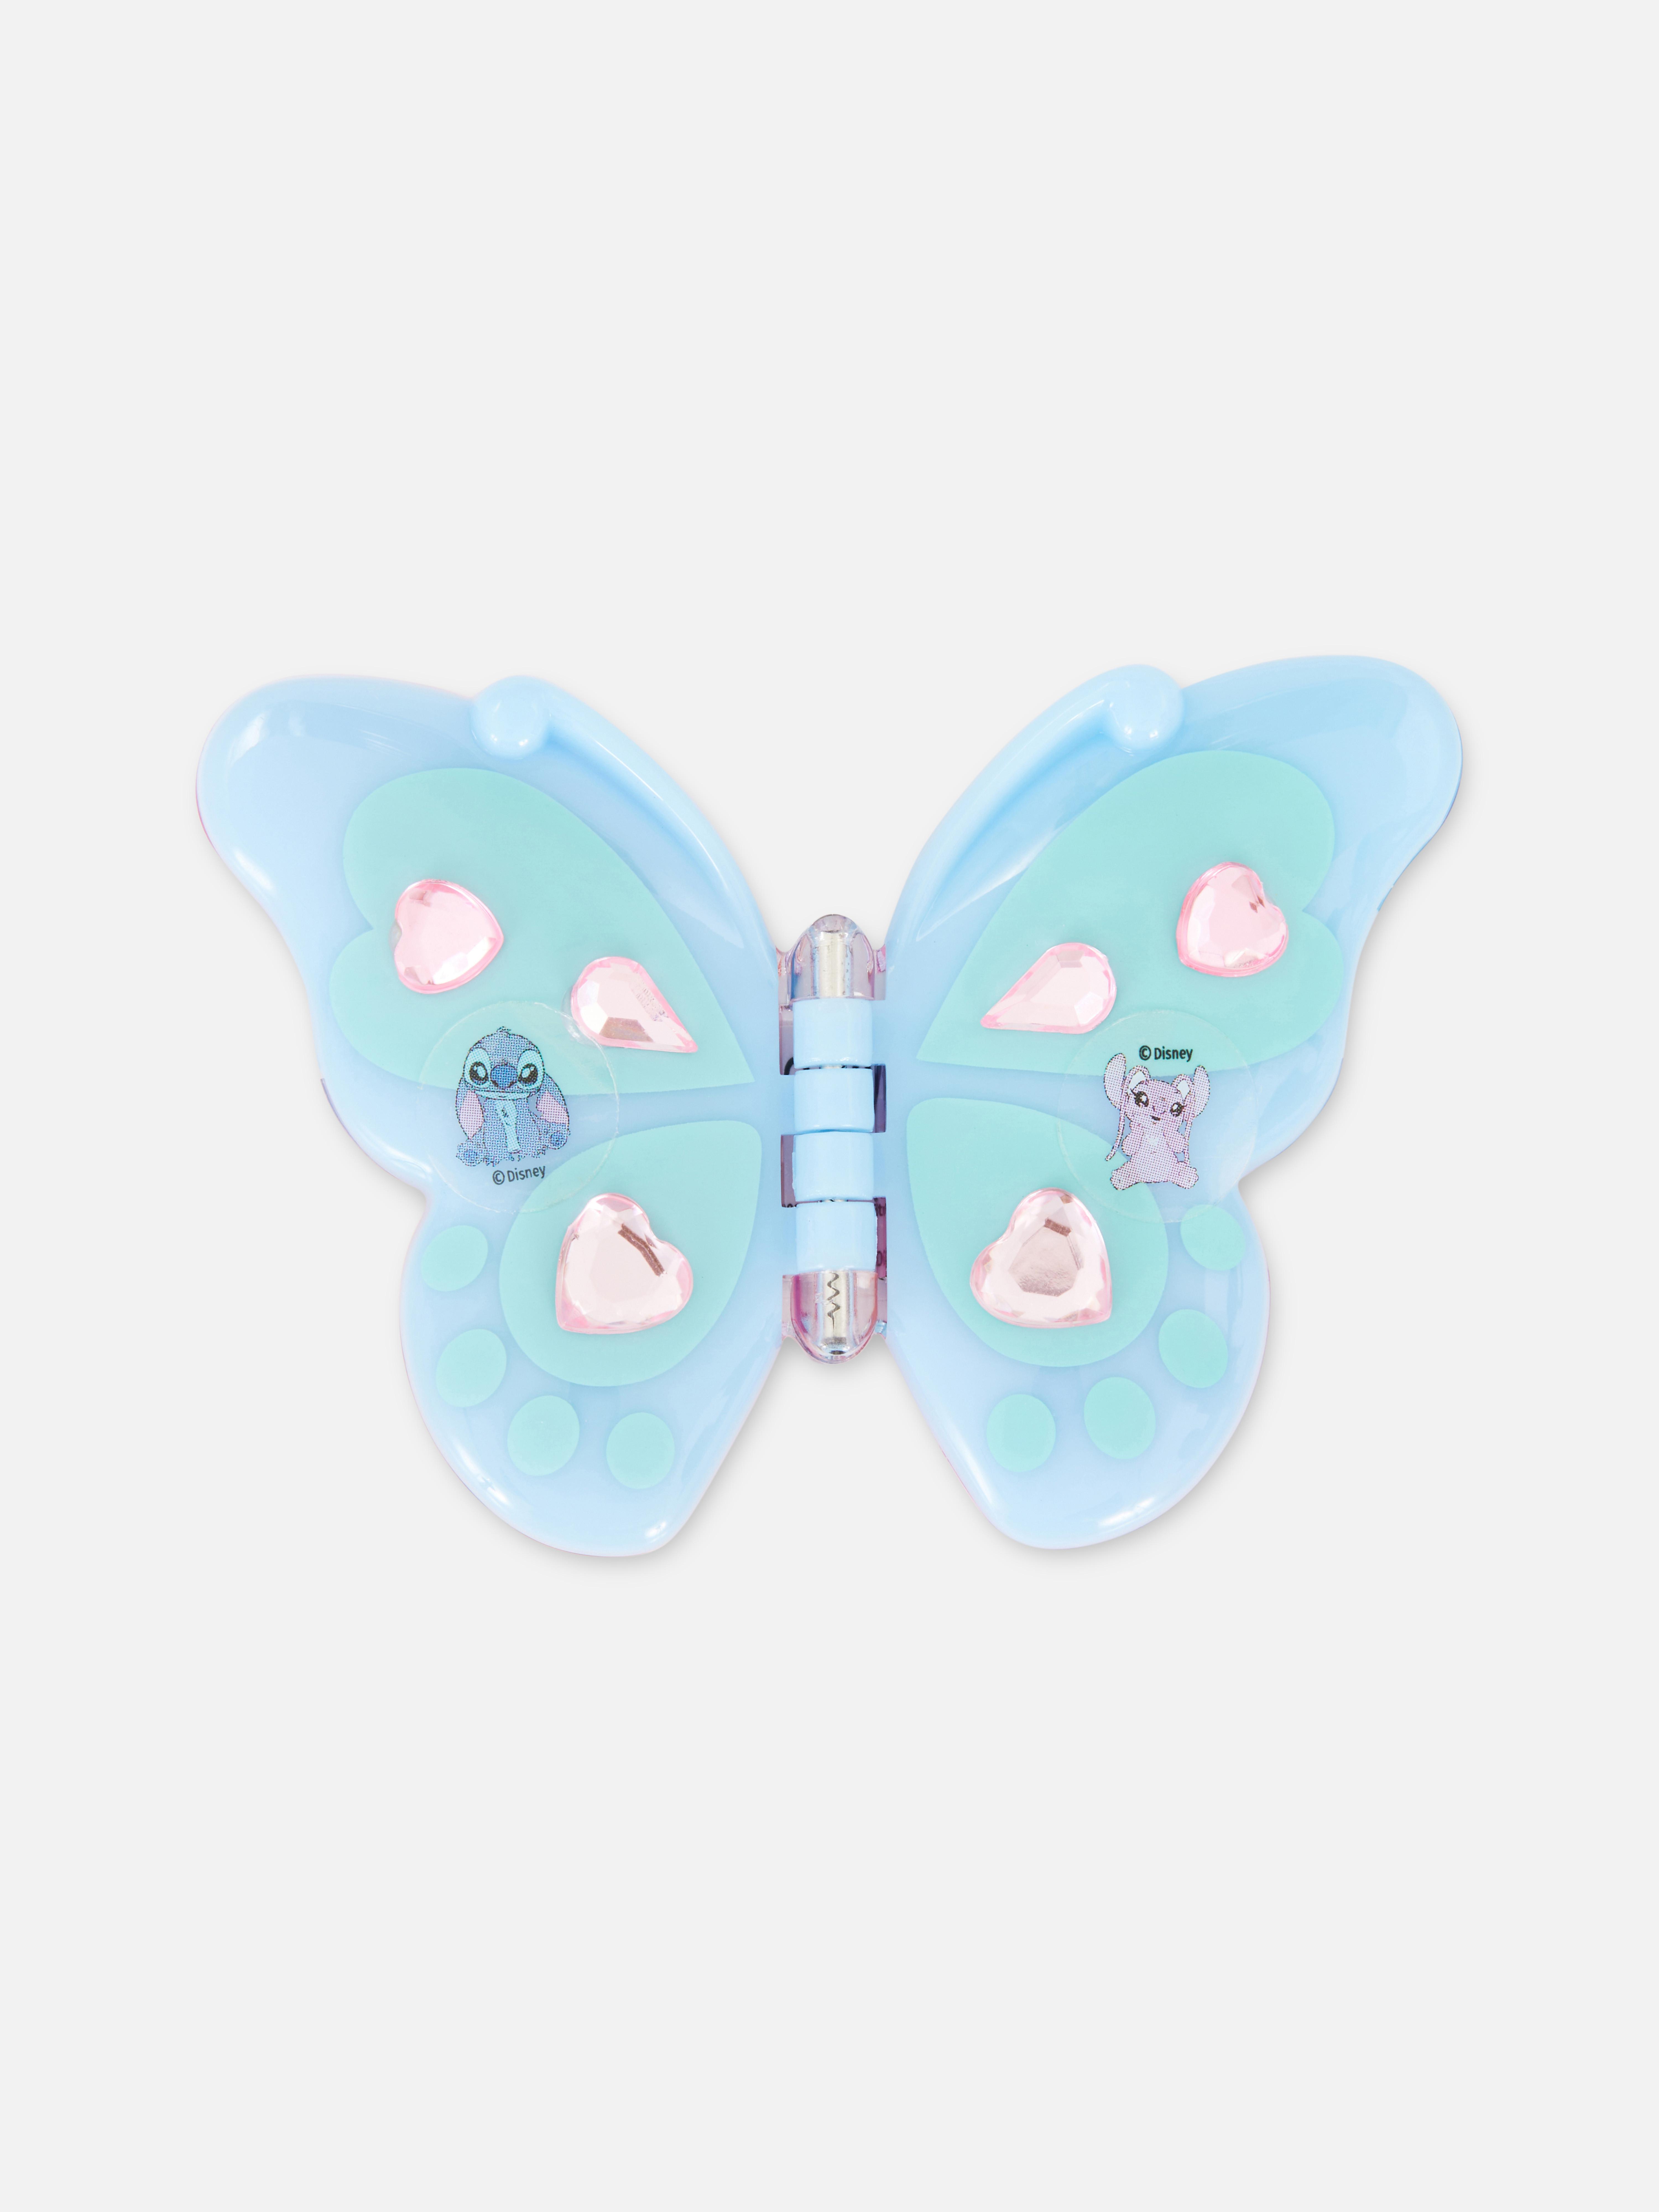 Set de labiales en estuche de mariposa de Disney